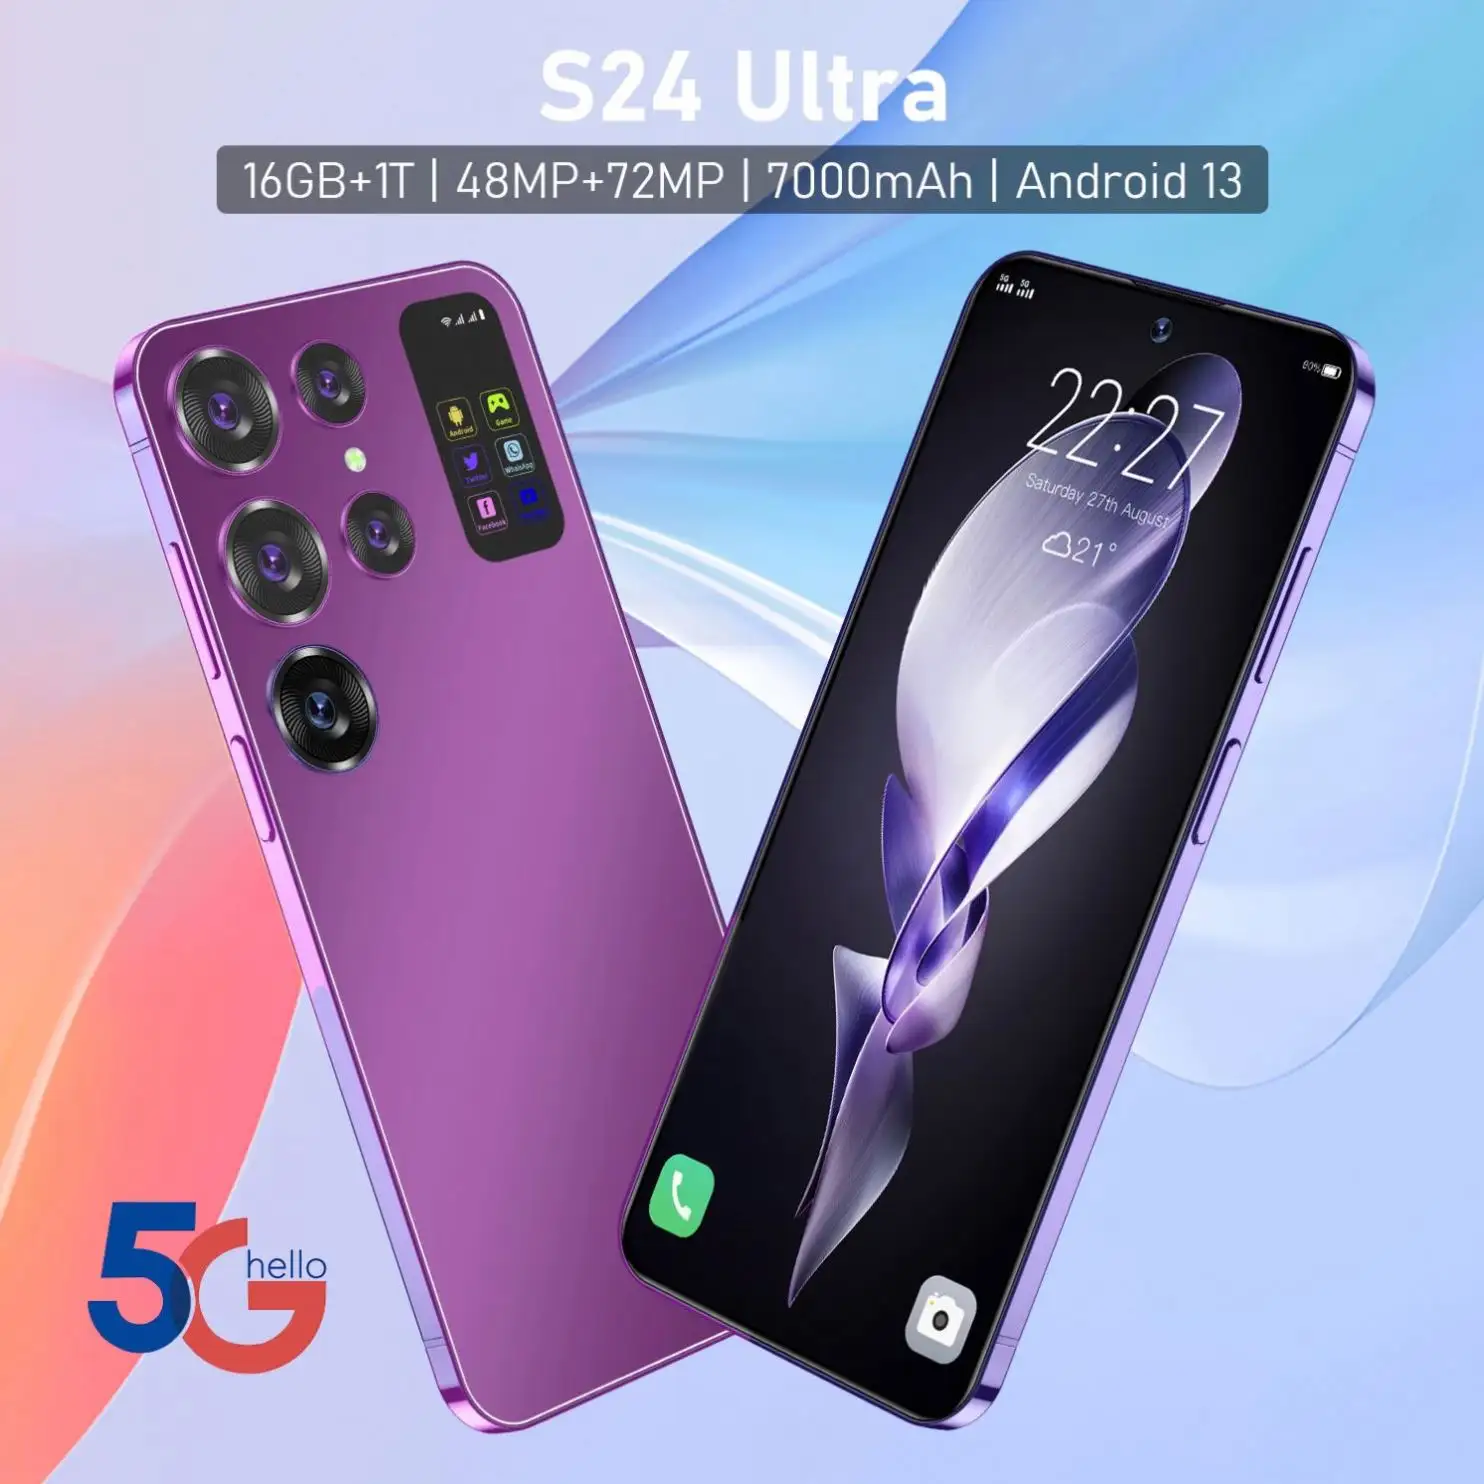 Original S24 Ultraสมาร์ทโฟนแบบเต็มหน้าจอโทรศัพท์AndroidสไตลัสในตัวFace IDปลดล็อกโทรศัพท์มือถือ